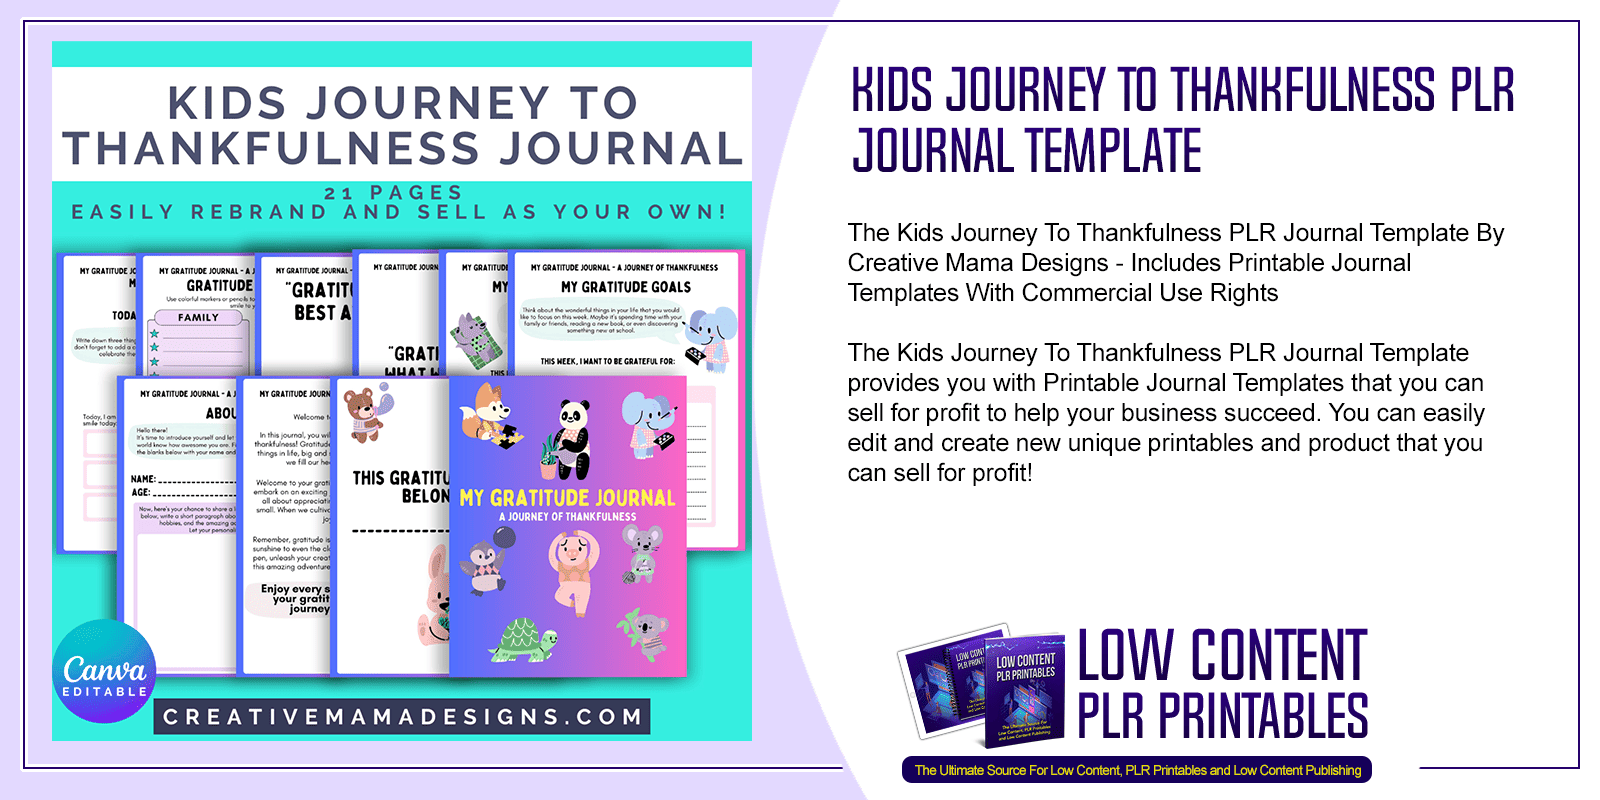 Kids Journey To Thankfulness PLR Journal Template